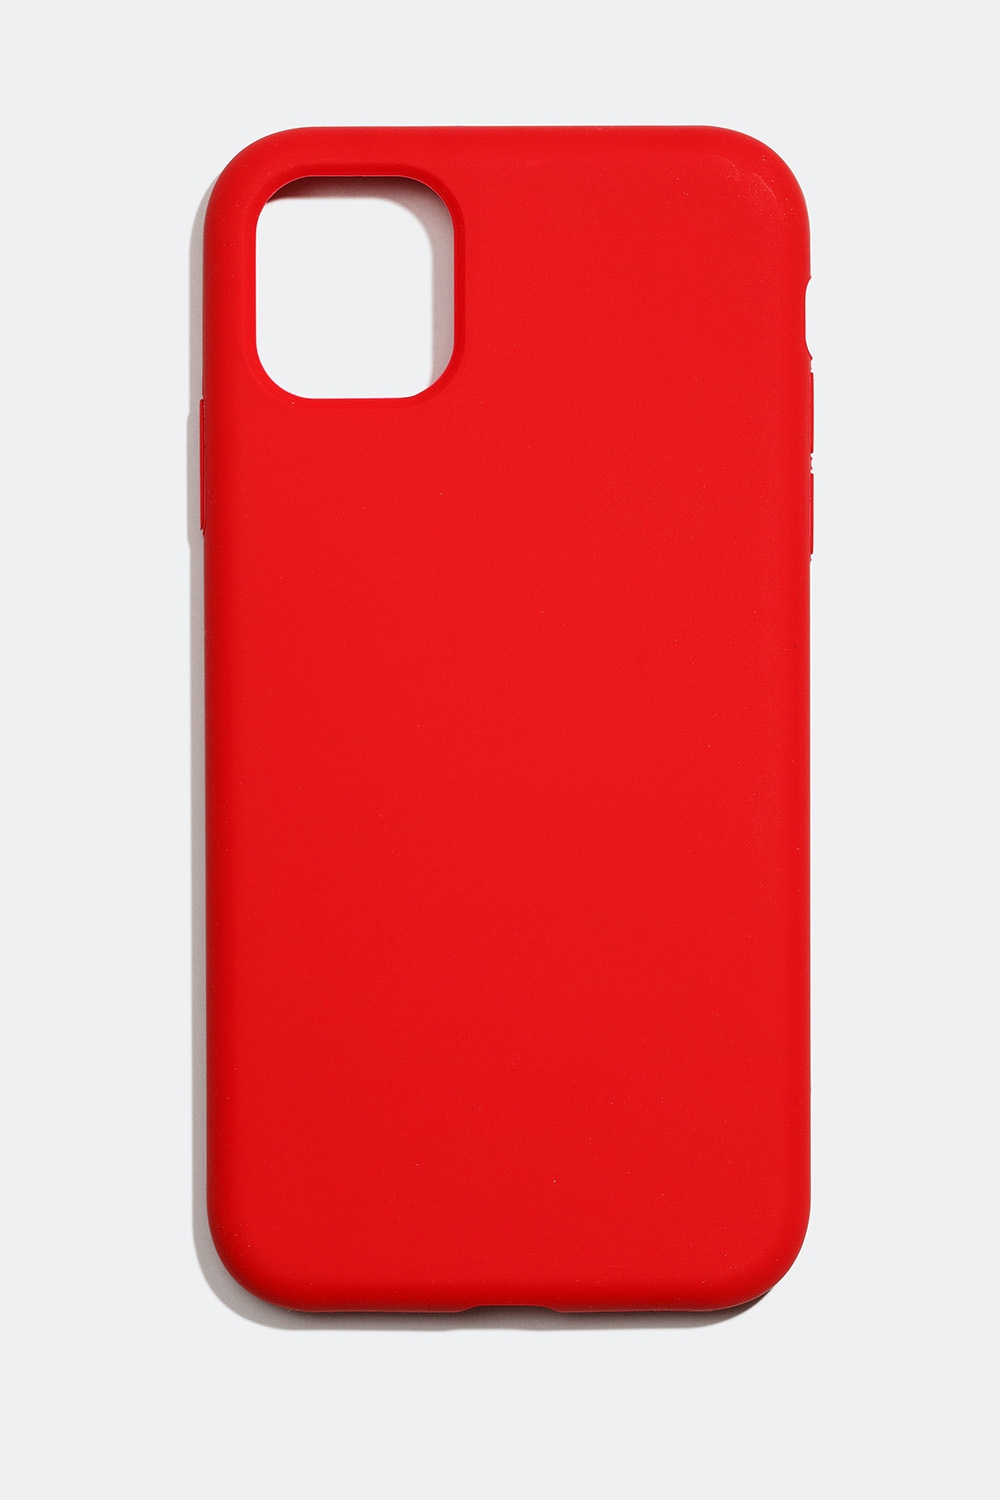 Telefoncover i mat rød – iPhone 11/XR i gruppen Tilbehør / Mobiltilbehør / Mobilcovers / iPhone 11 / XR hos Glitter (174000356211)